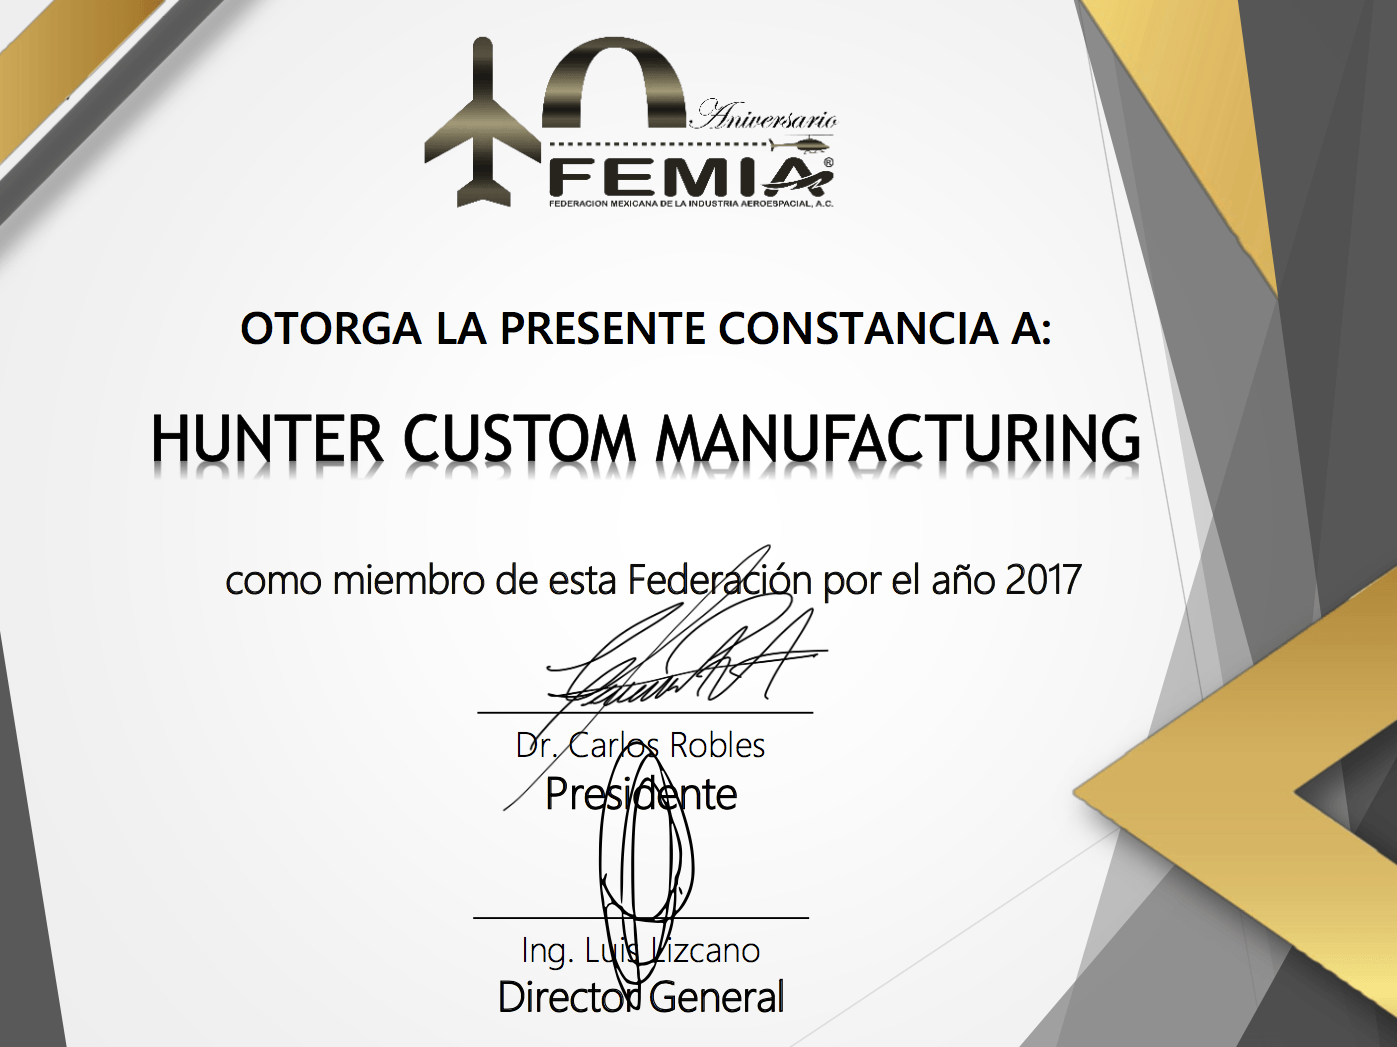 FEMIA Certification